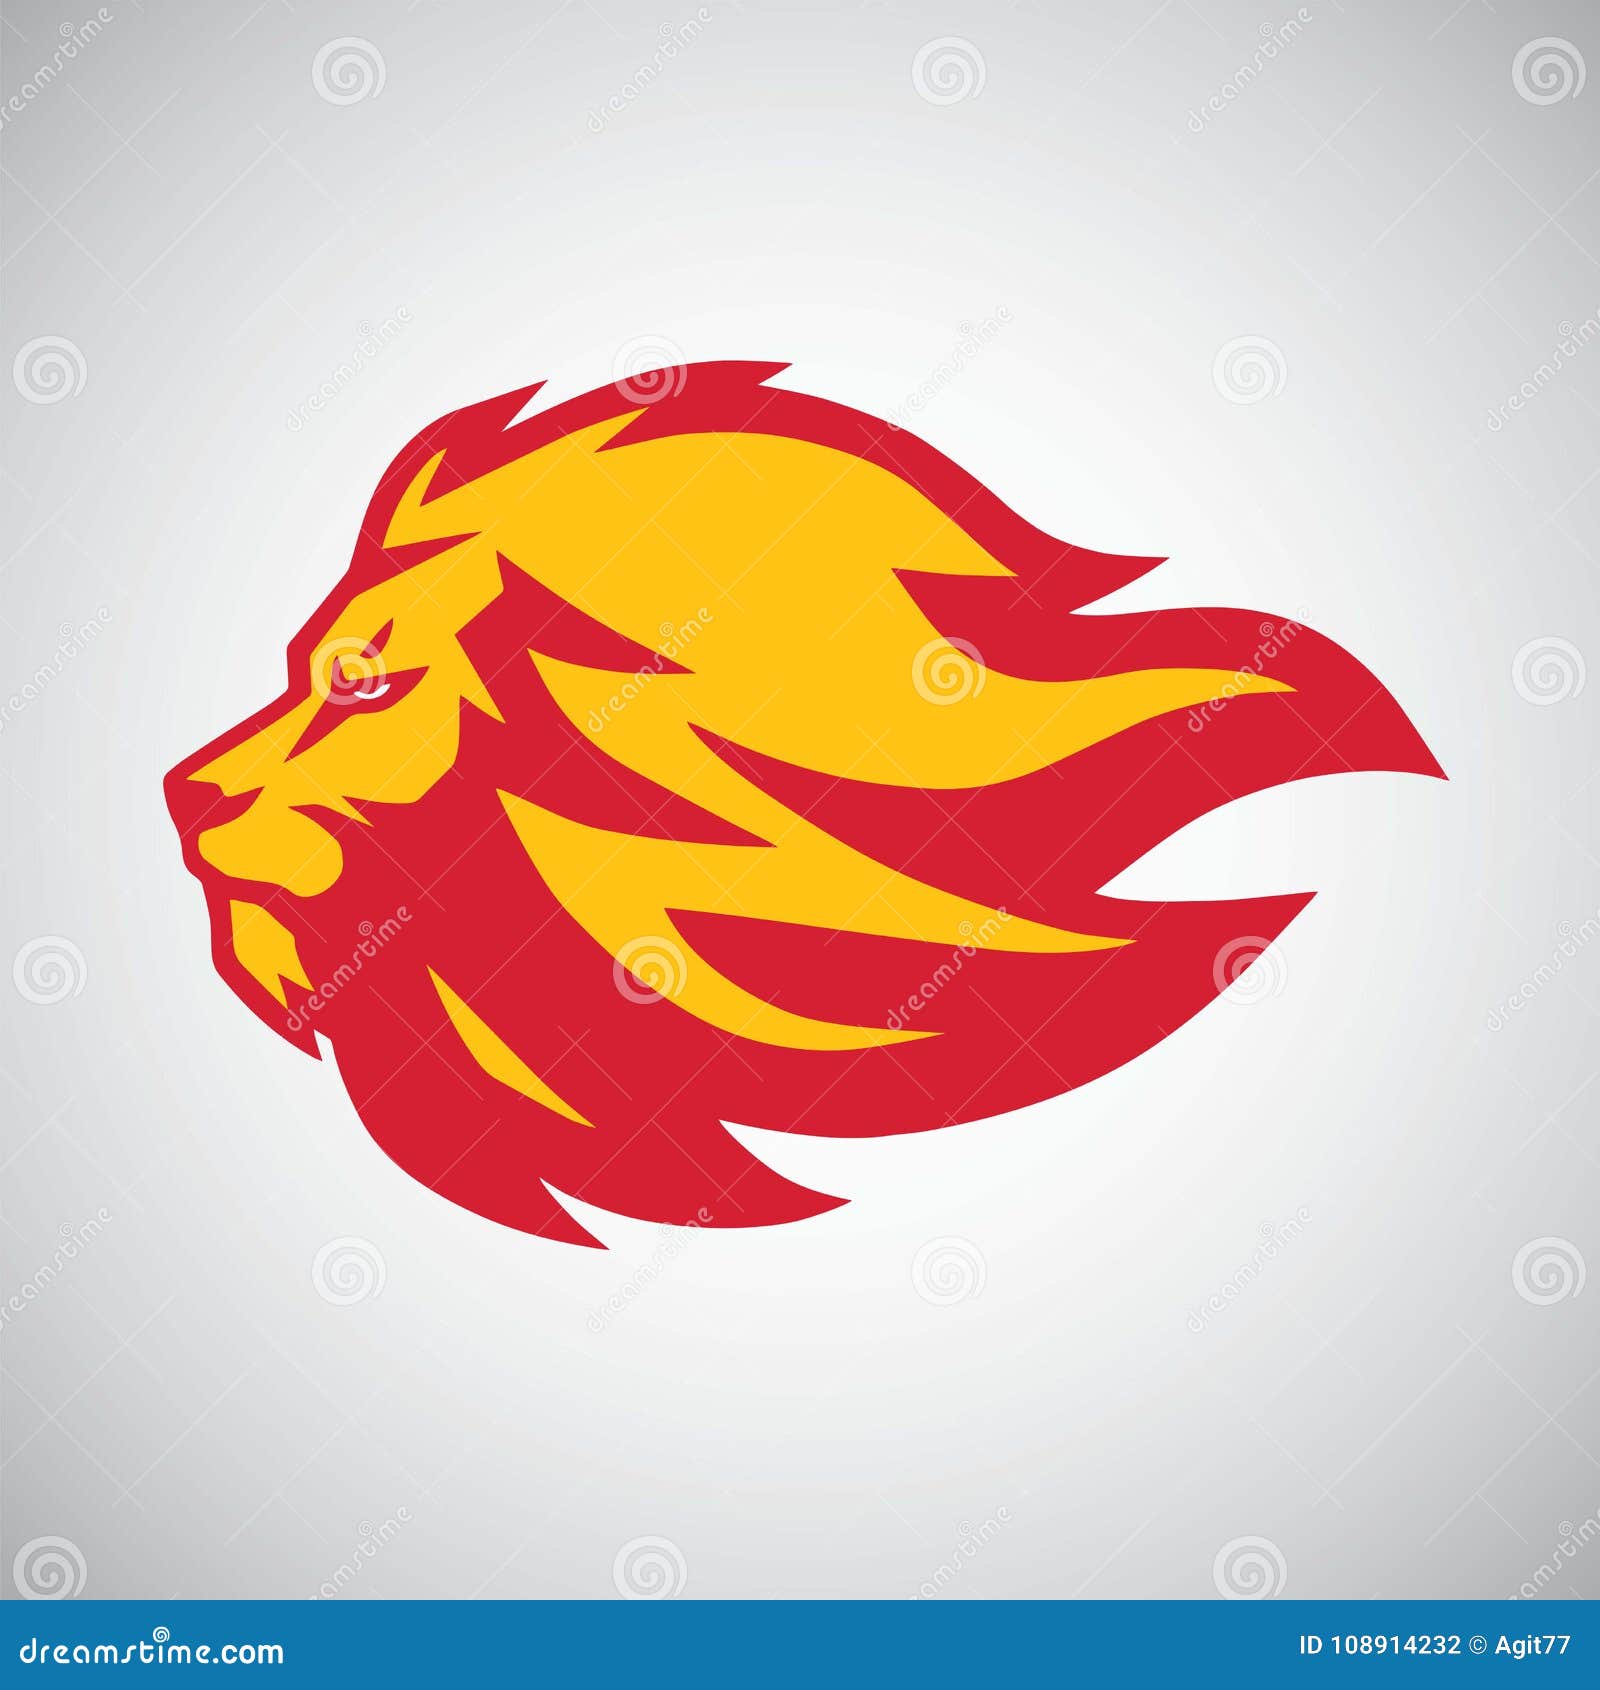 Lion Flame Fire Logo Design Stock Vector Illustration Of Label Insignia